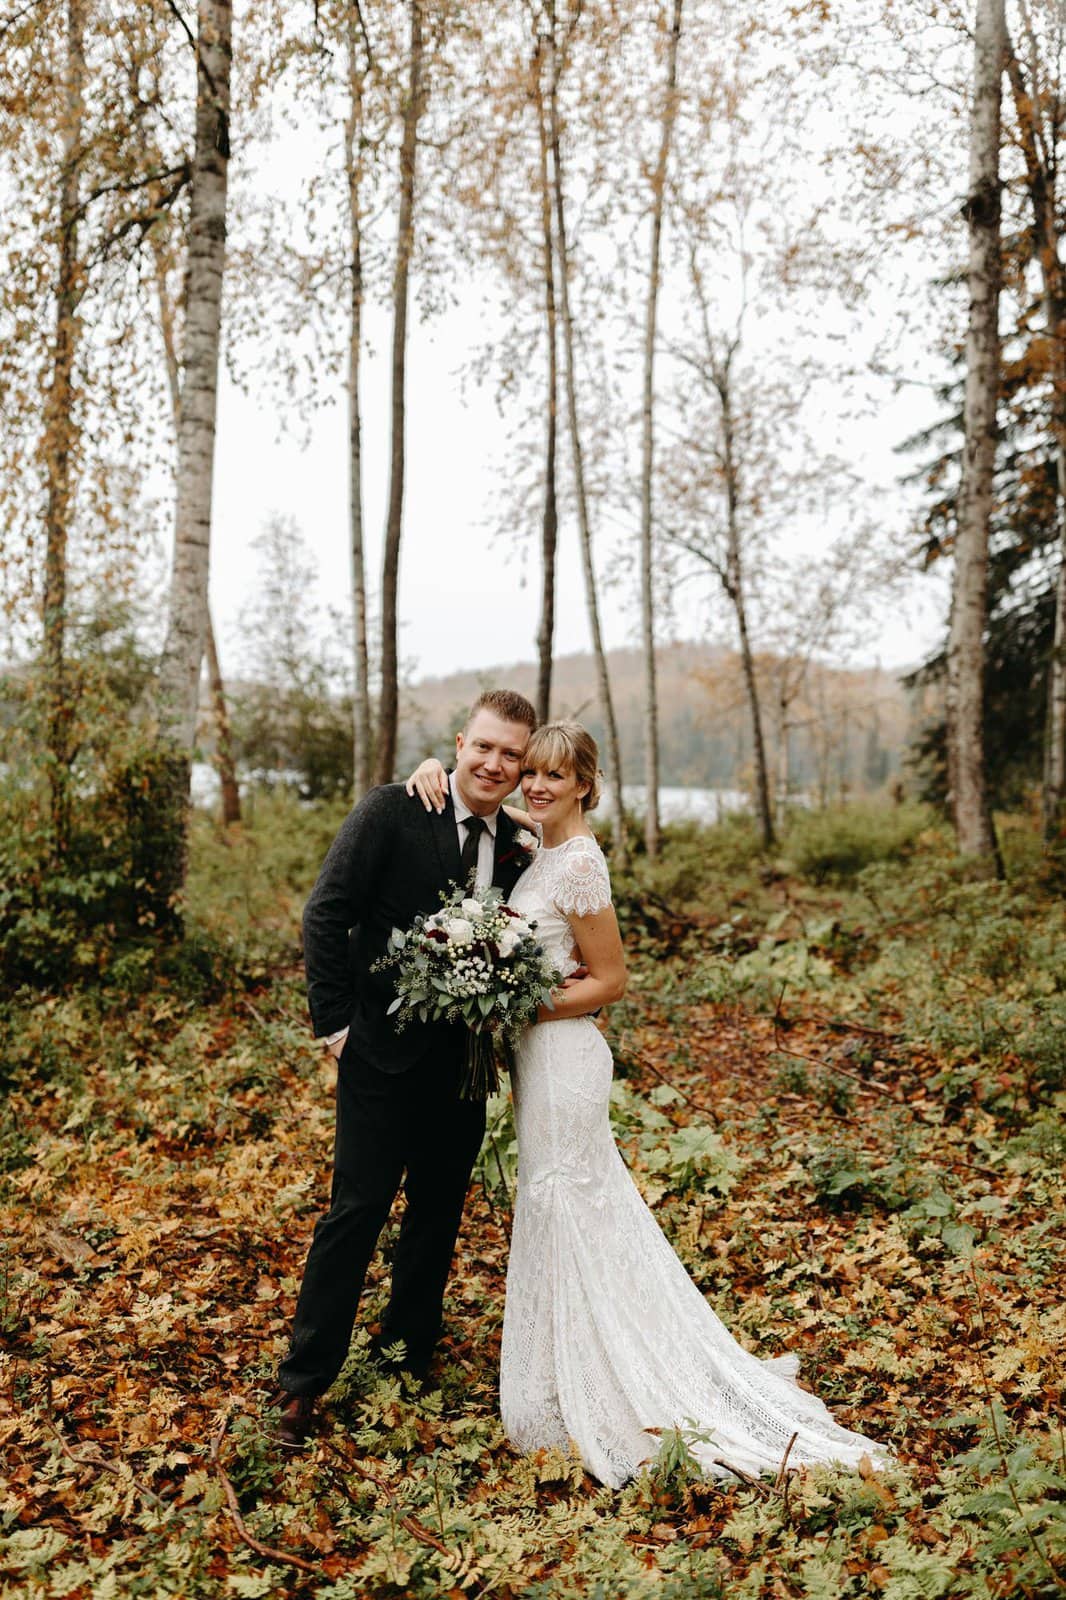 This Alaska Elopement Will Inspire You to Elope | Wandering Weddings